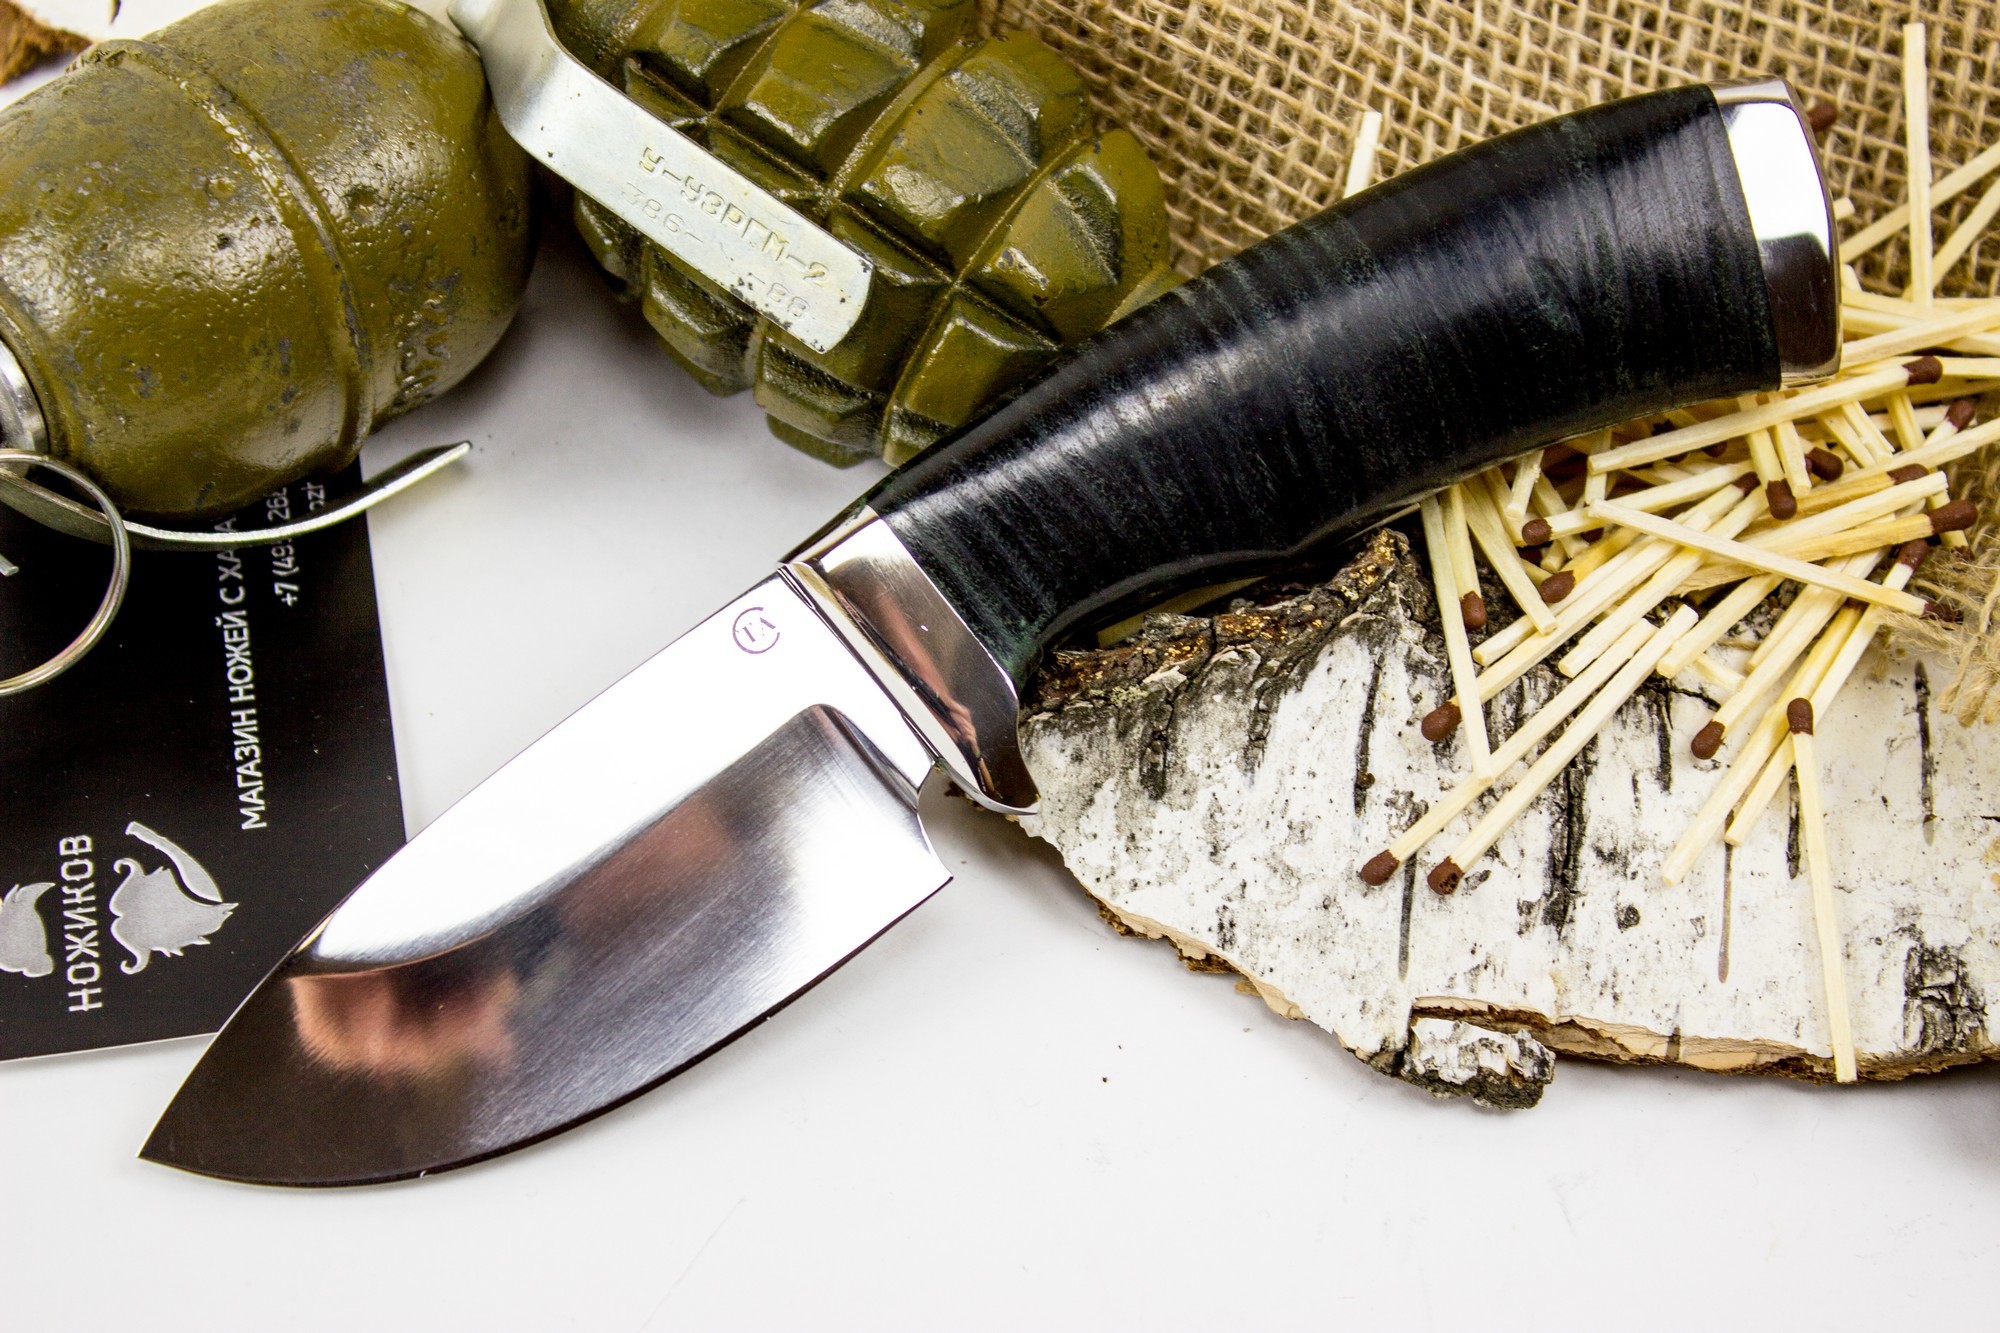 Нож Барсук-3, сталь 95х18, кожа